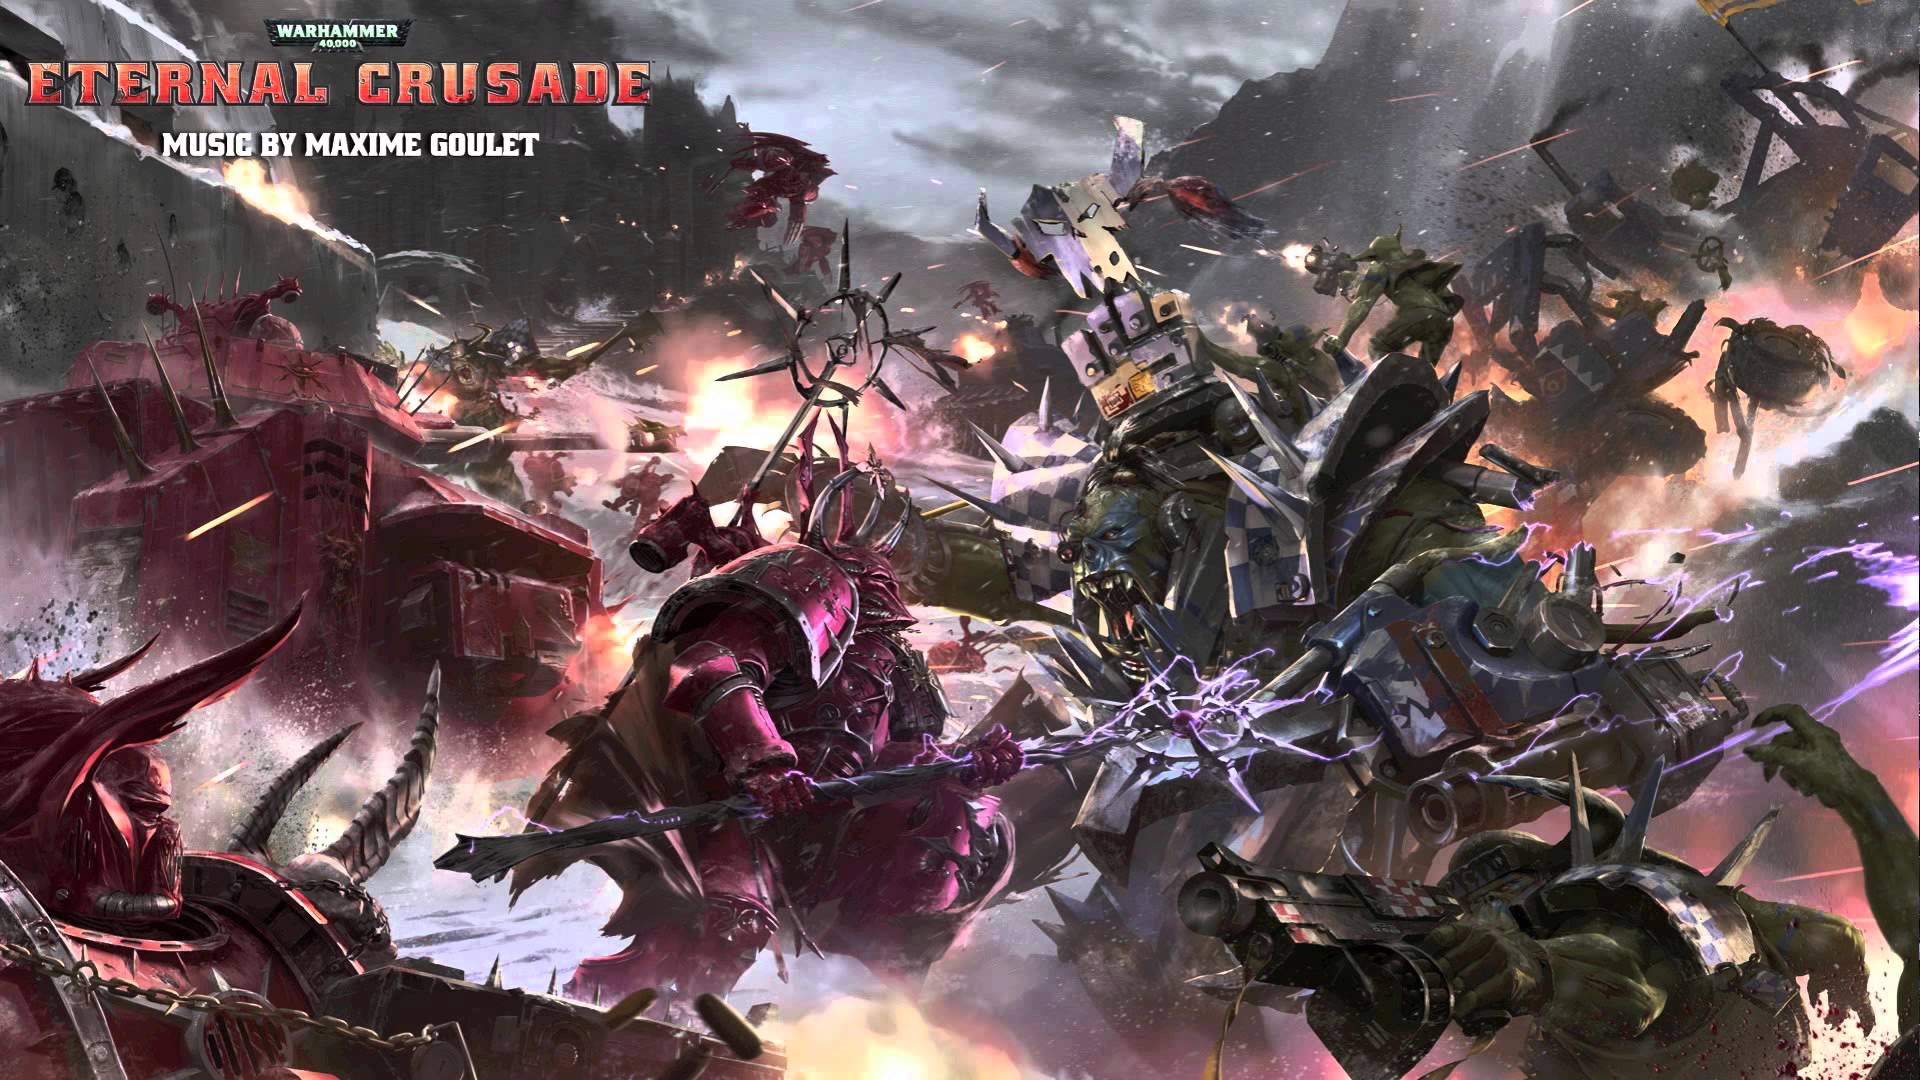 Warhammer 000: Eternal Crusade Soundtrack. Chaos Space Marines